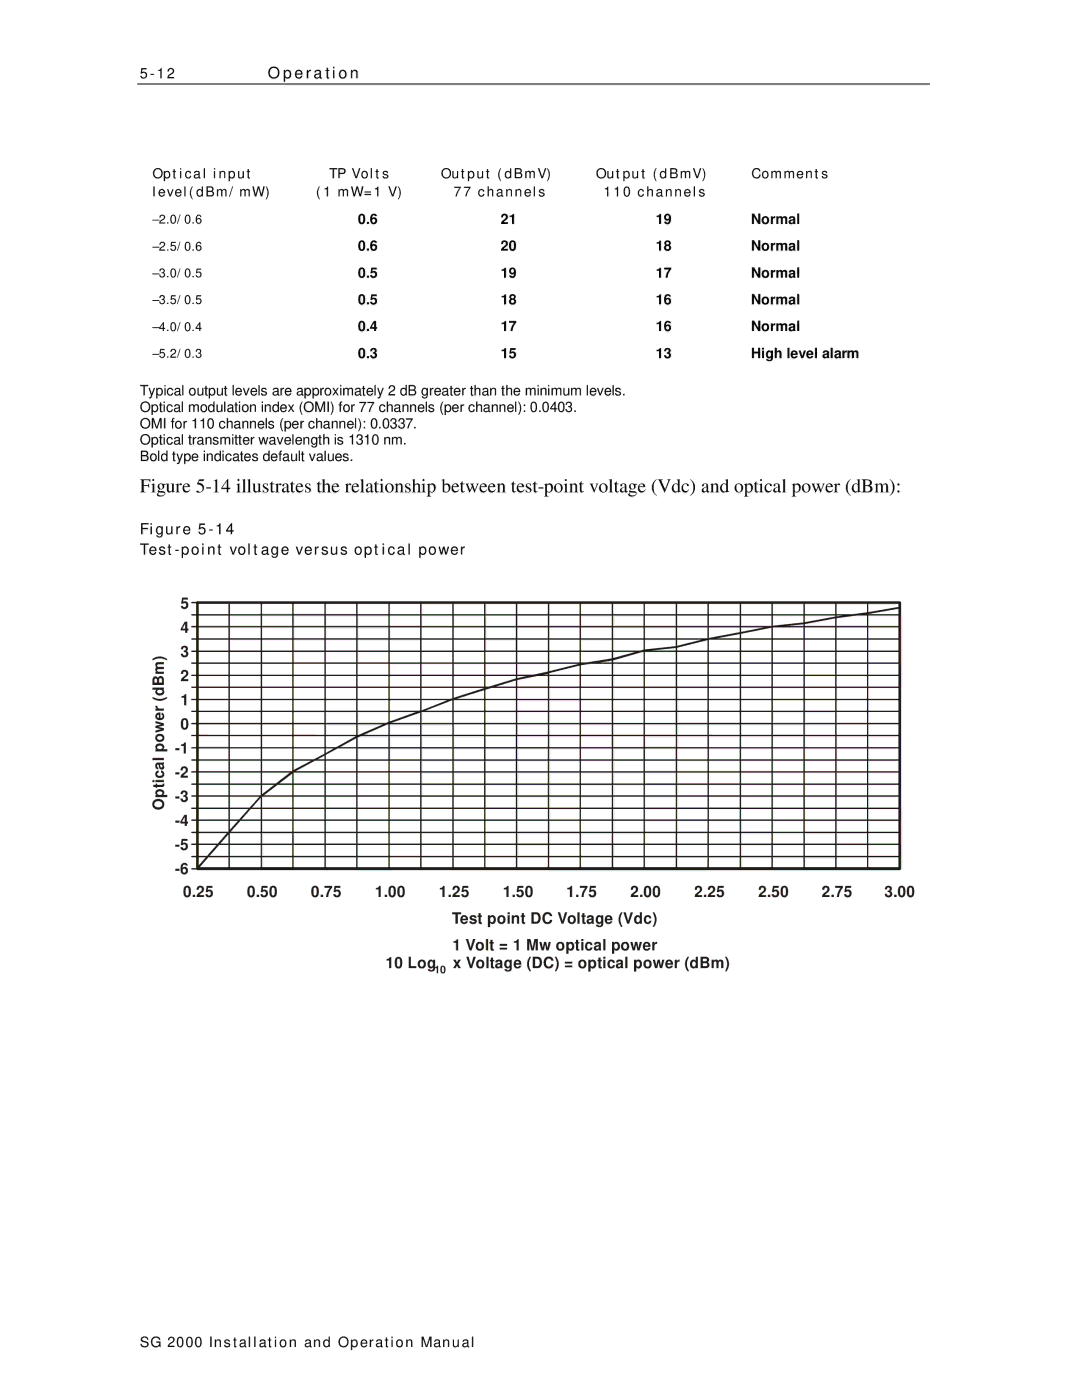 Motorola SG 2000 operation manual Test-point voltage versus optical power, 0.3 